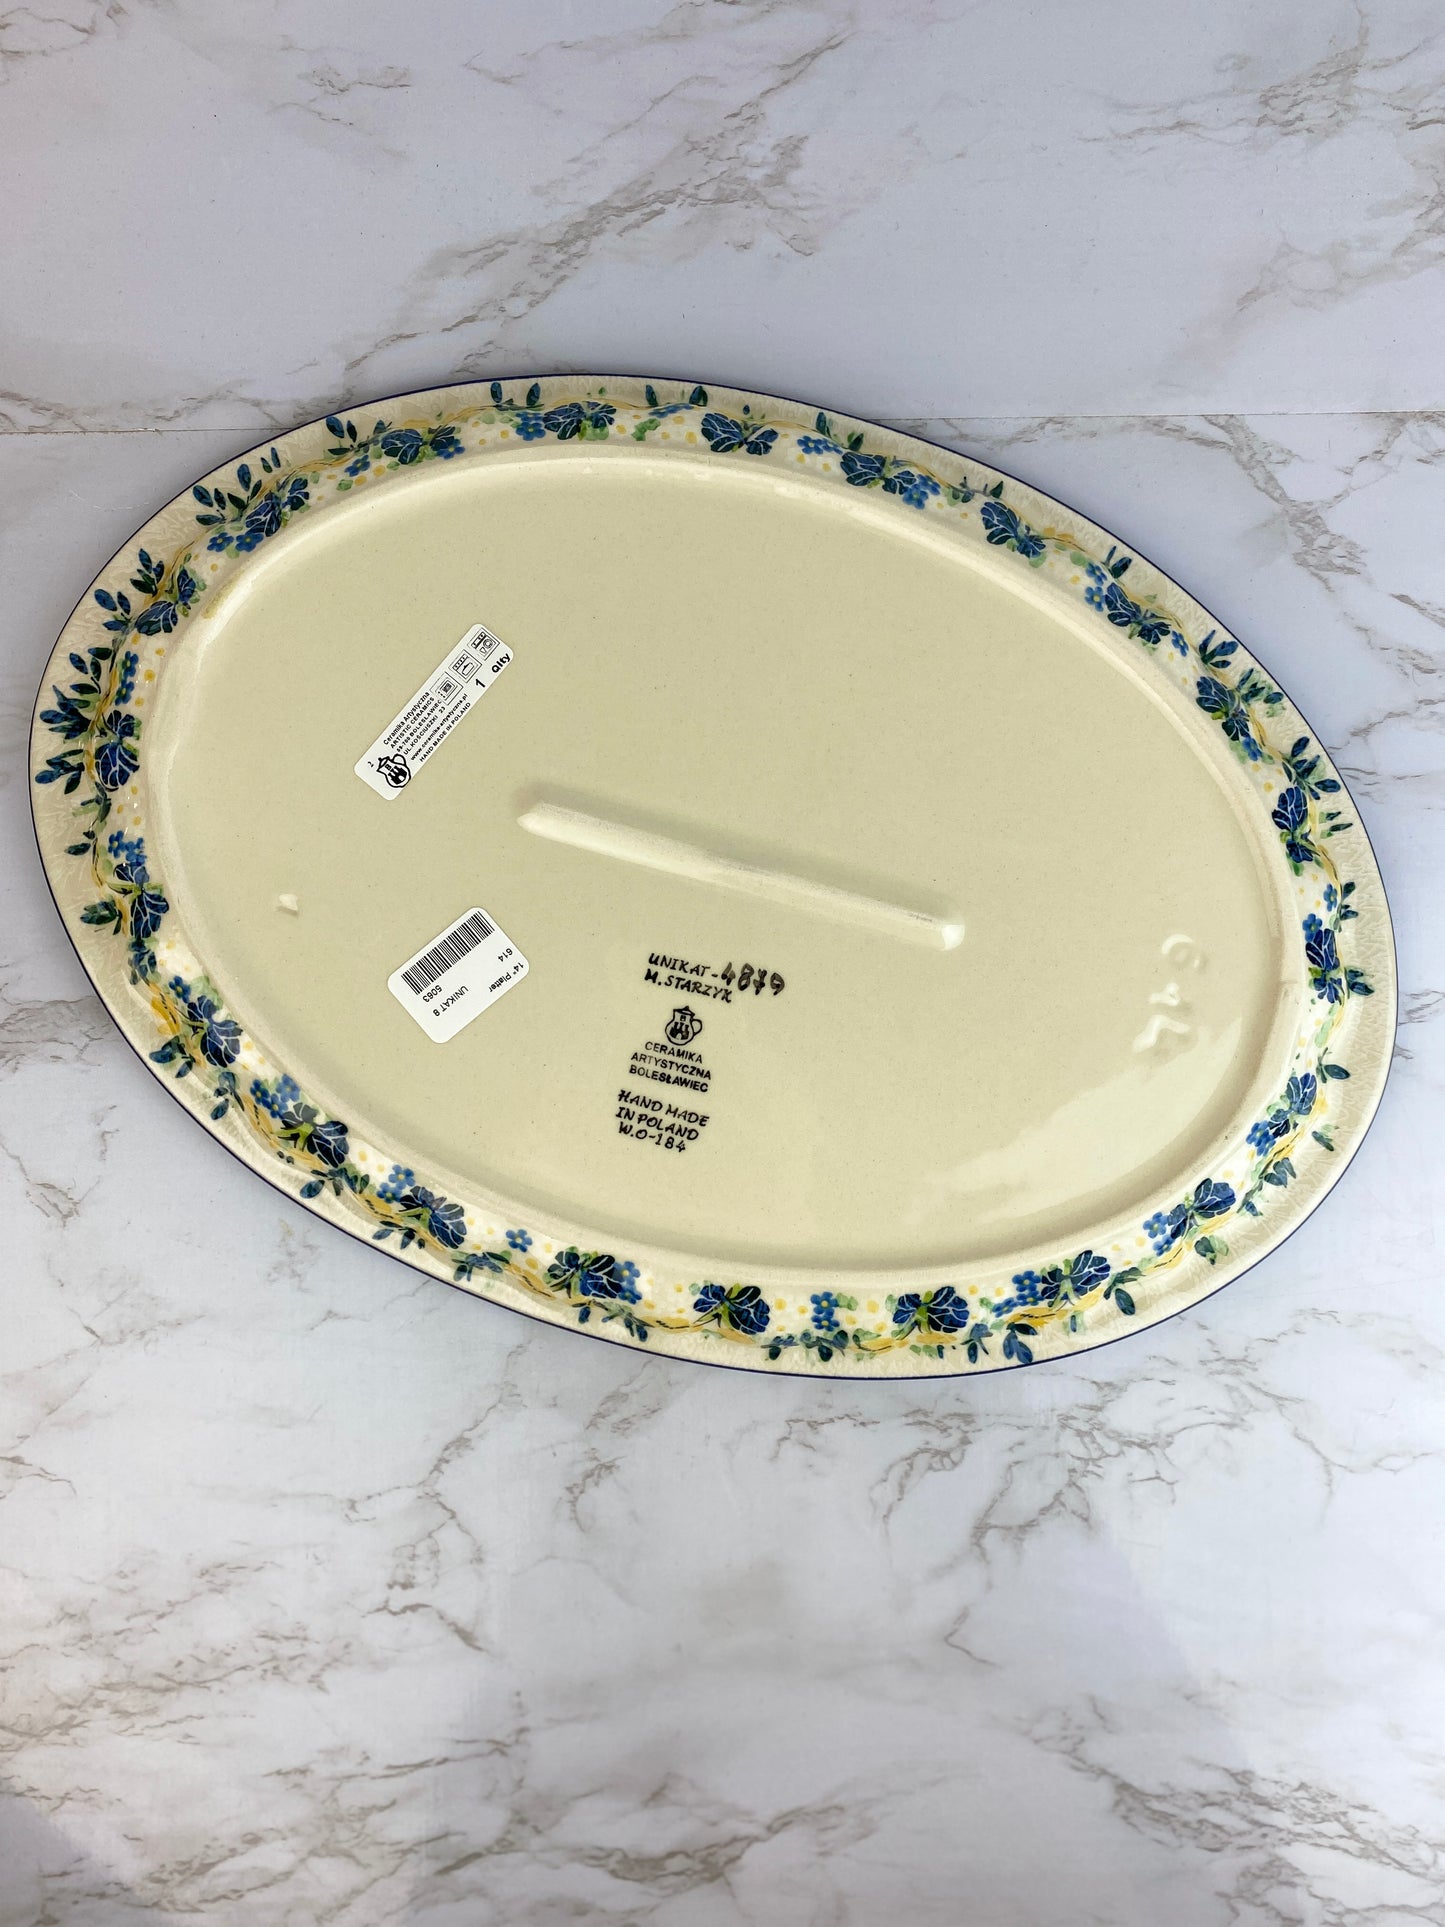 Unikat Oval Platter - Shape 614 - Pattern U4879